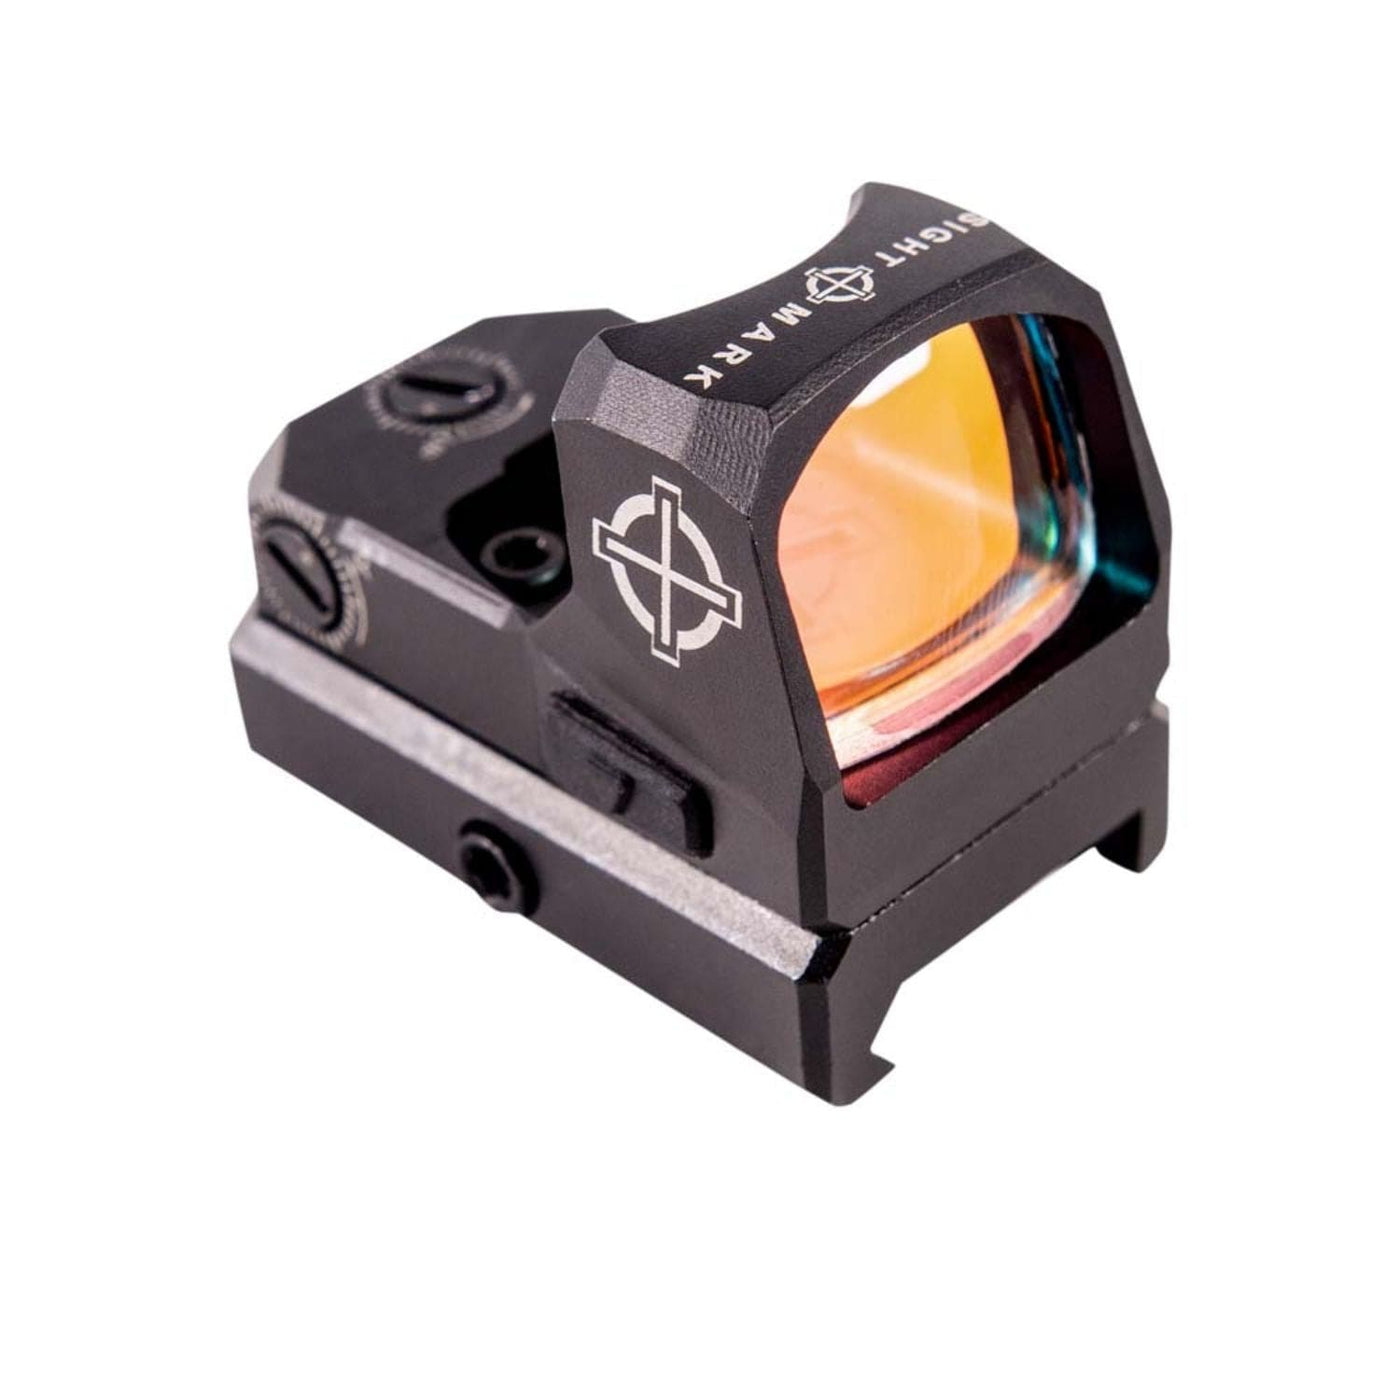 Sightmark Sightmark Mini Shot A-Spec Reflex Red Optics And Sights